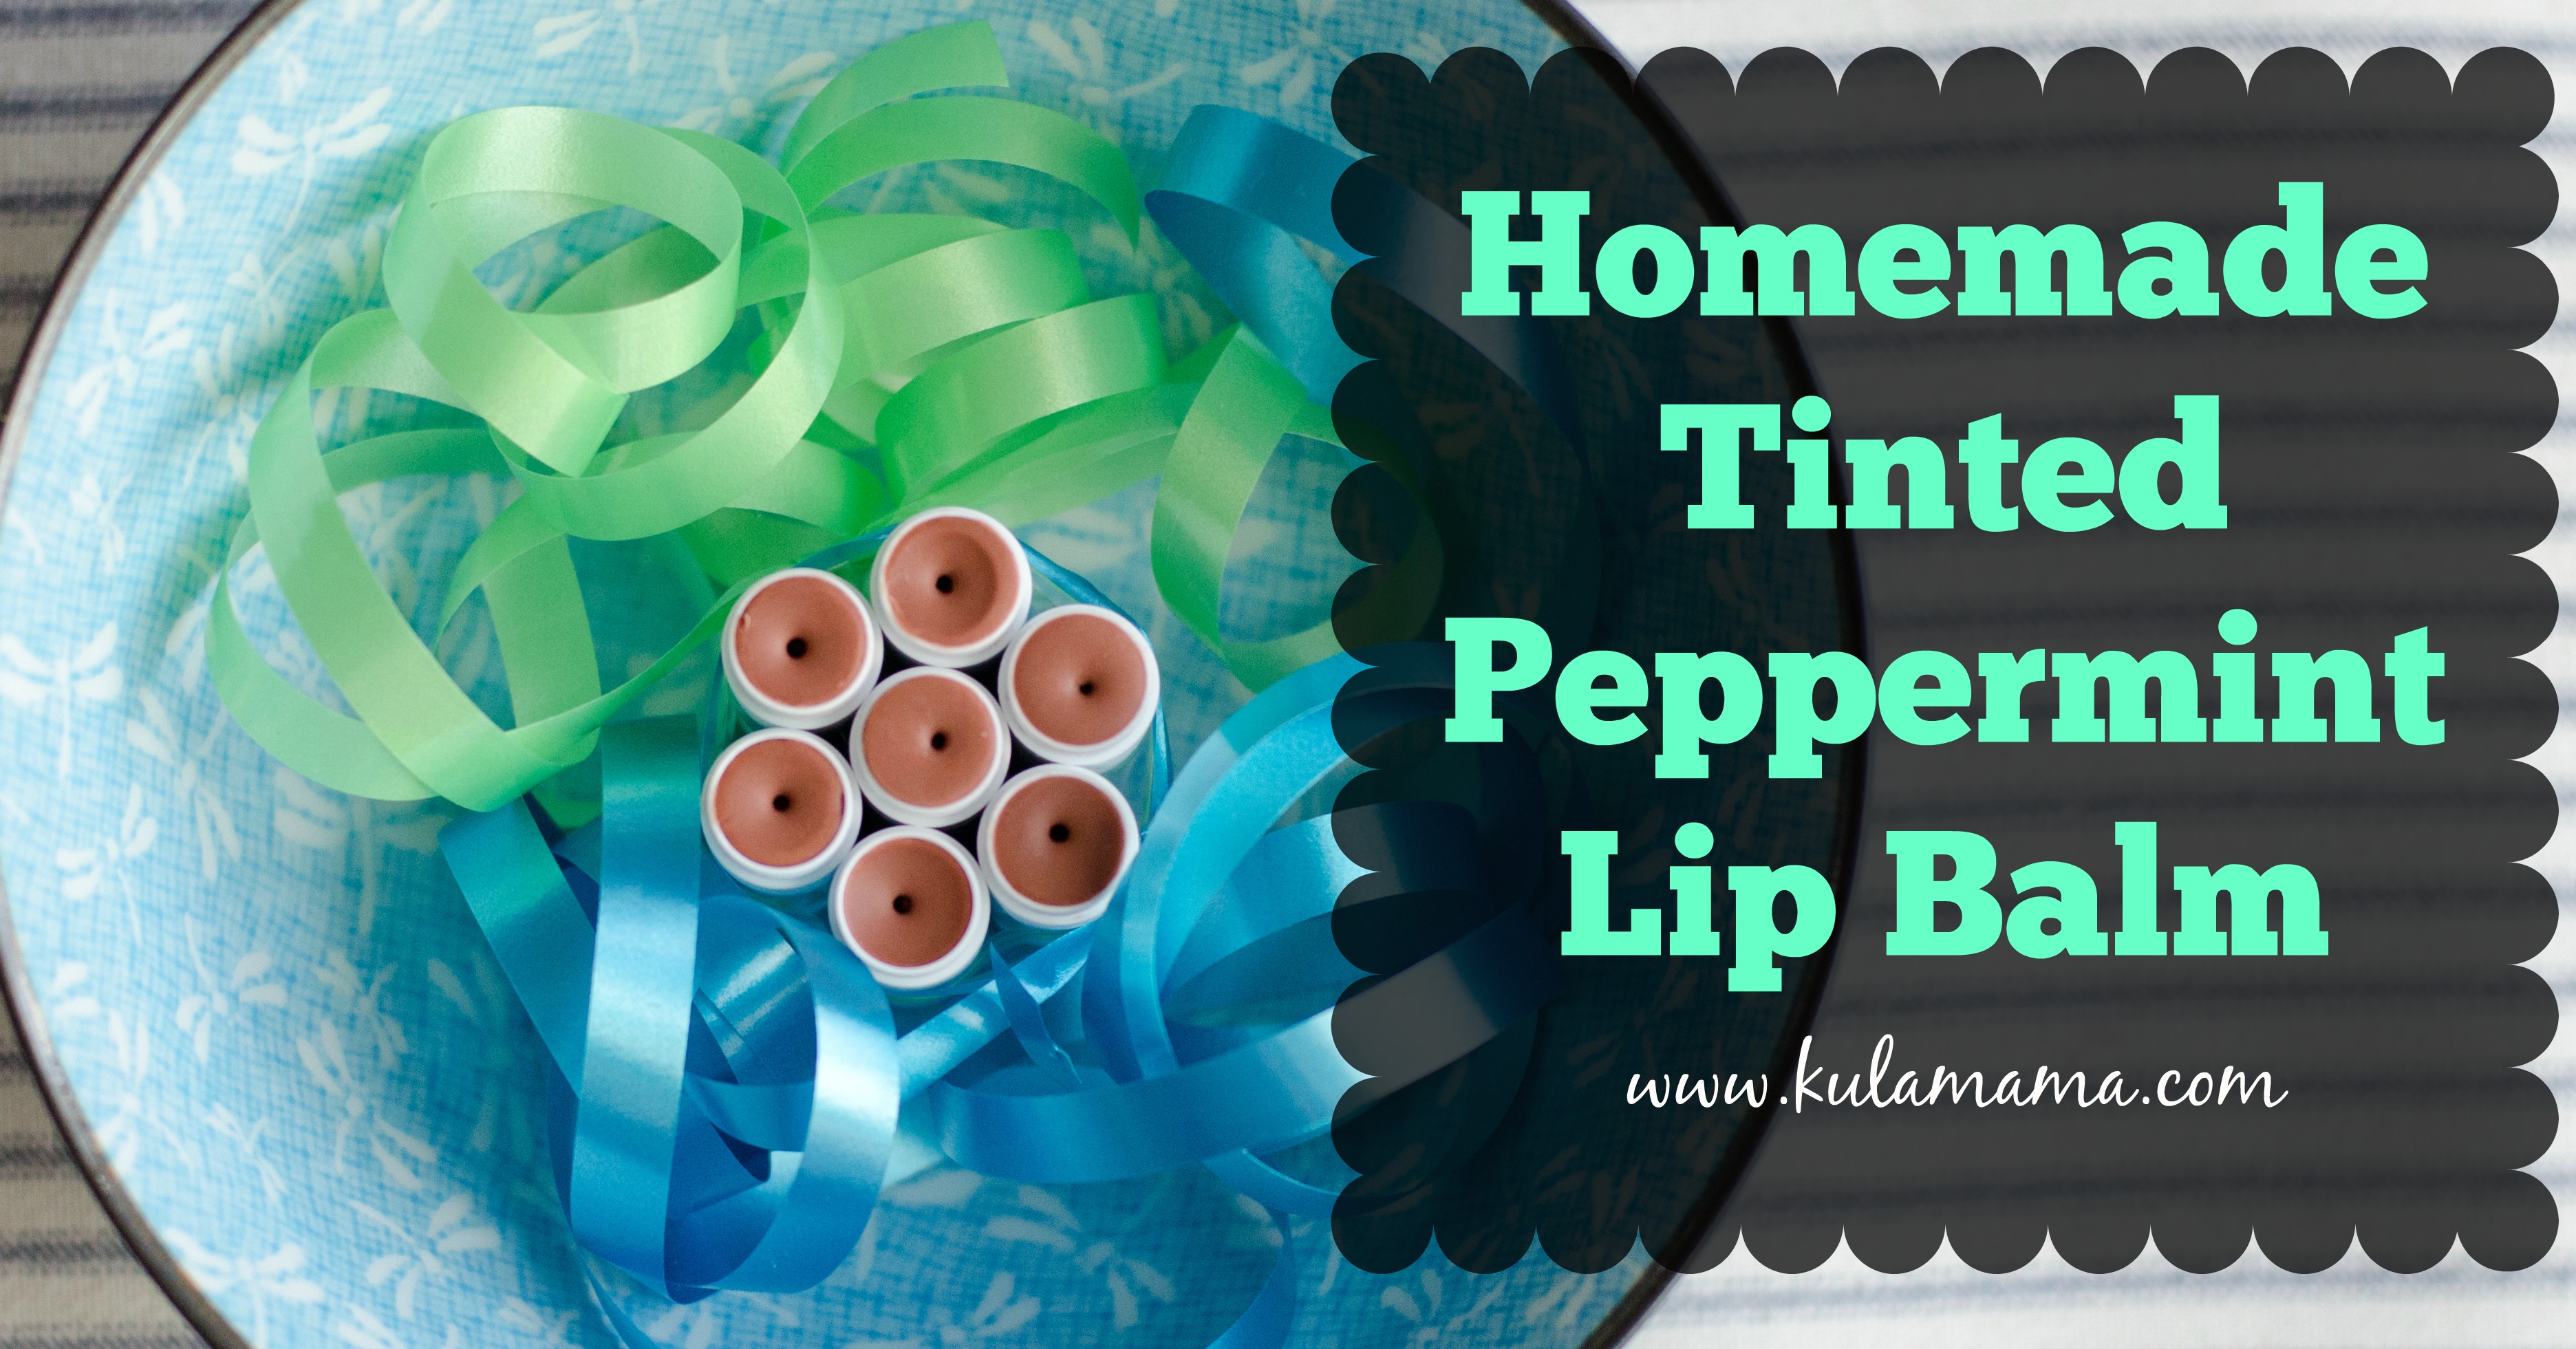 Homemade Tinted Peppermint Lip Balm